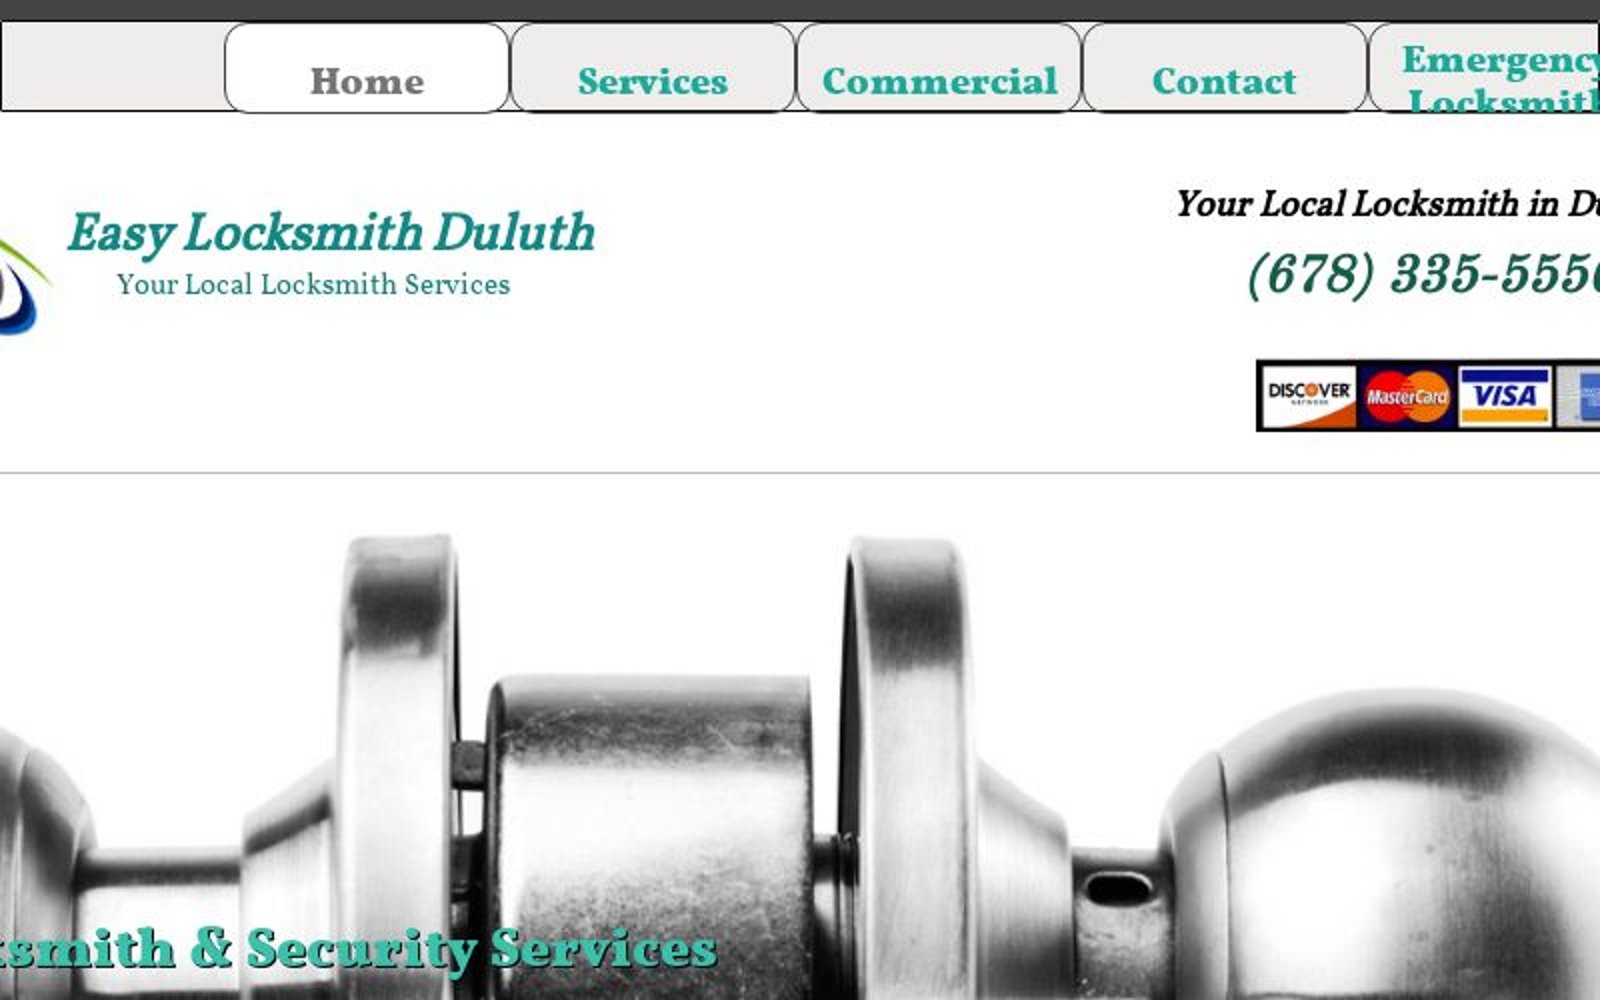 (c) Locksmith-duluth.com